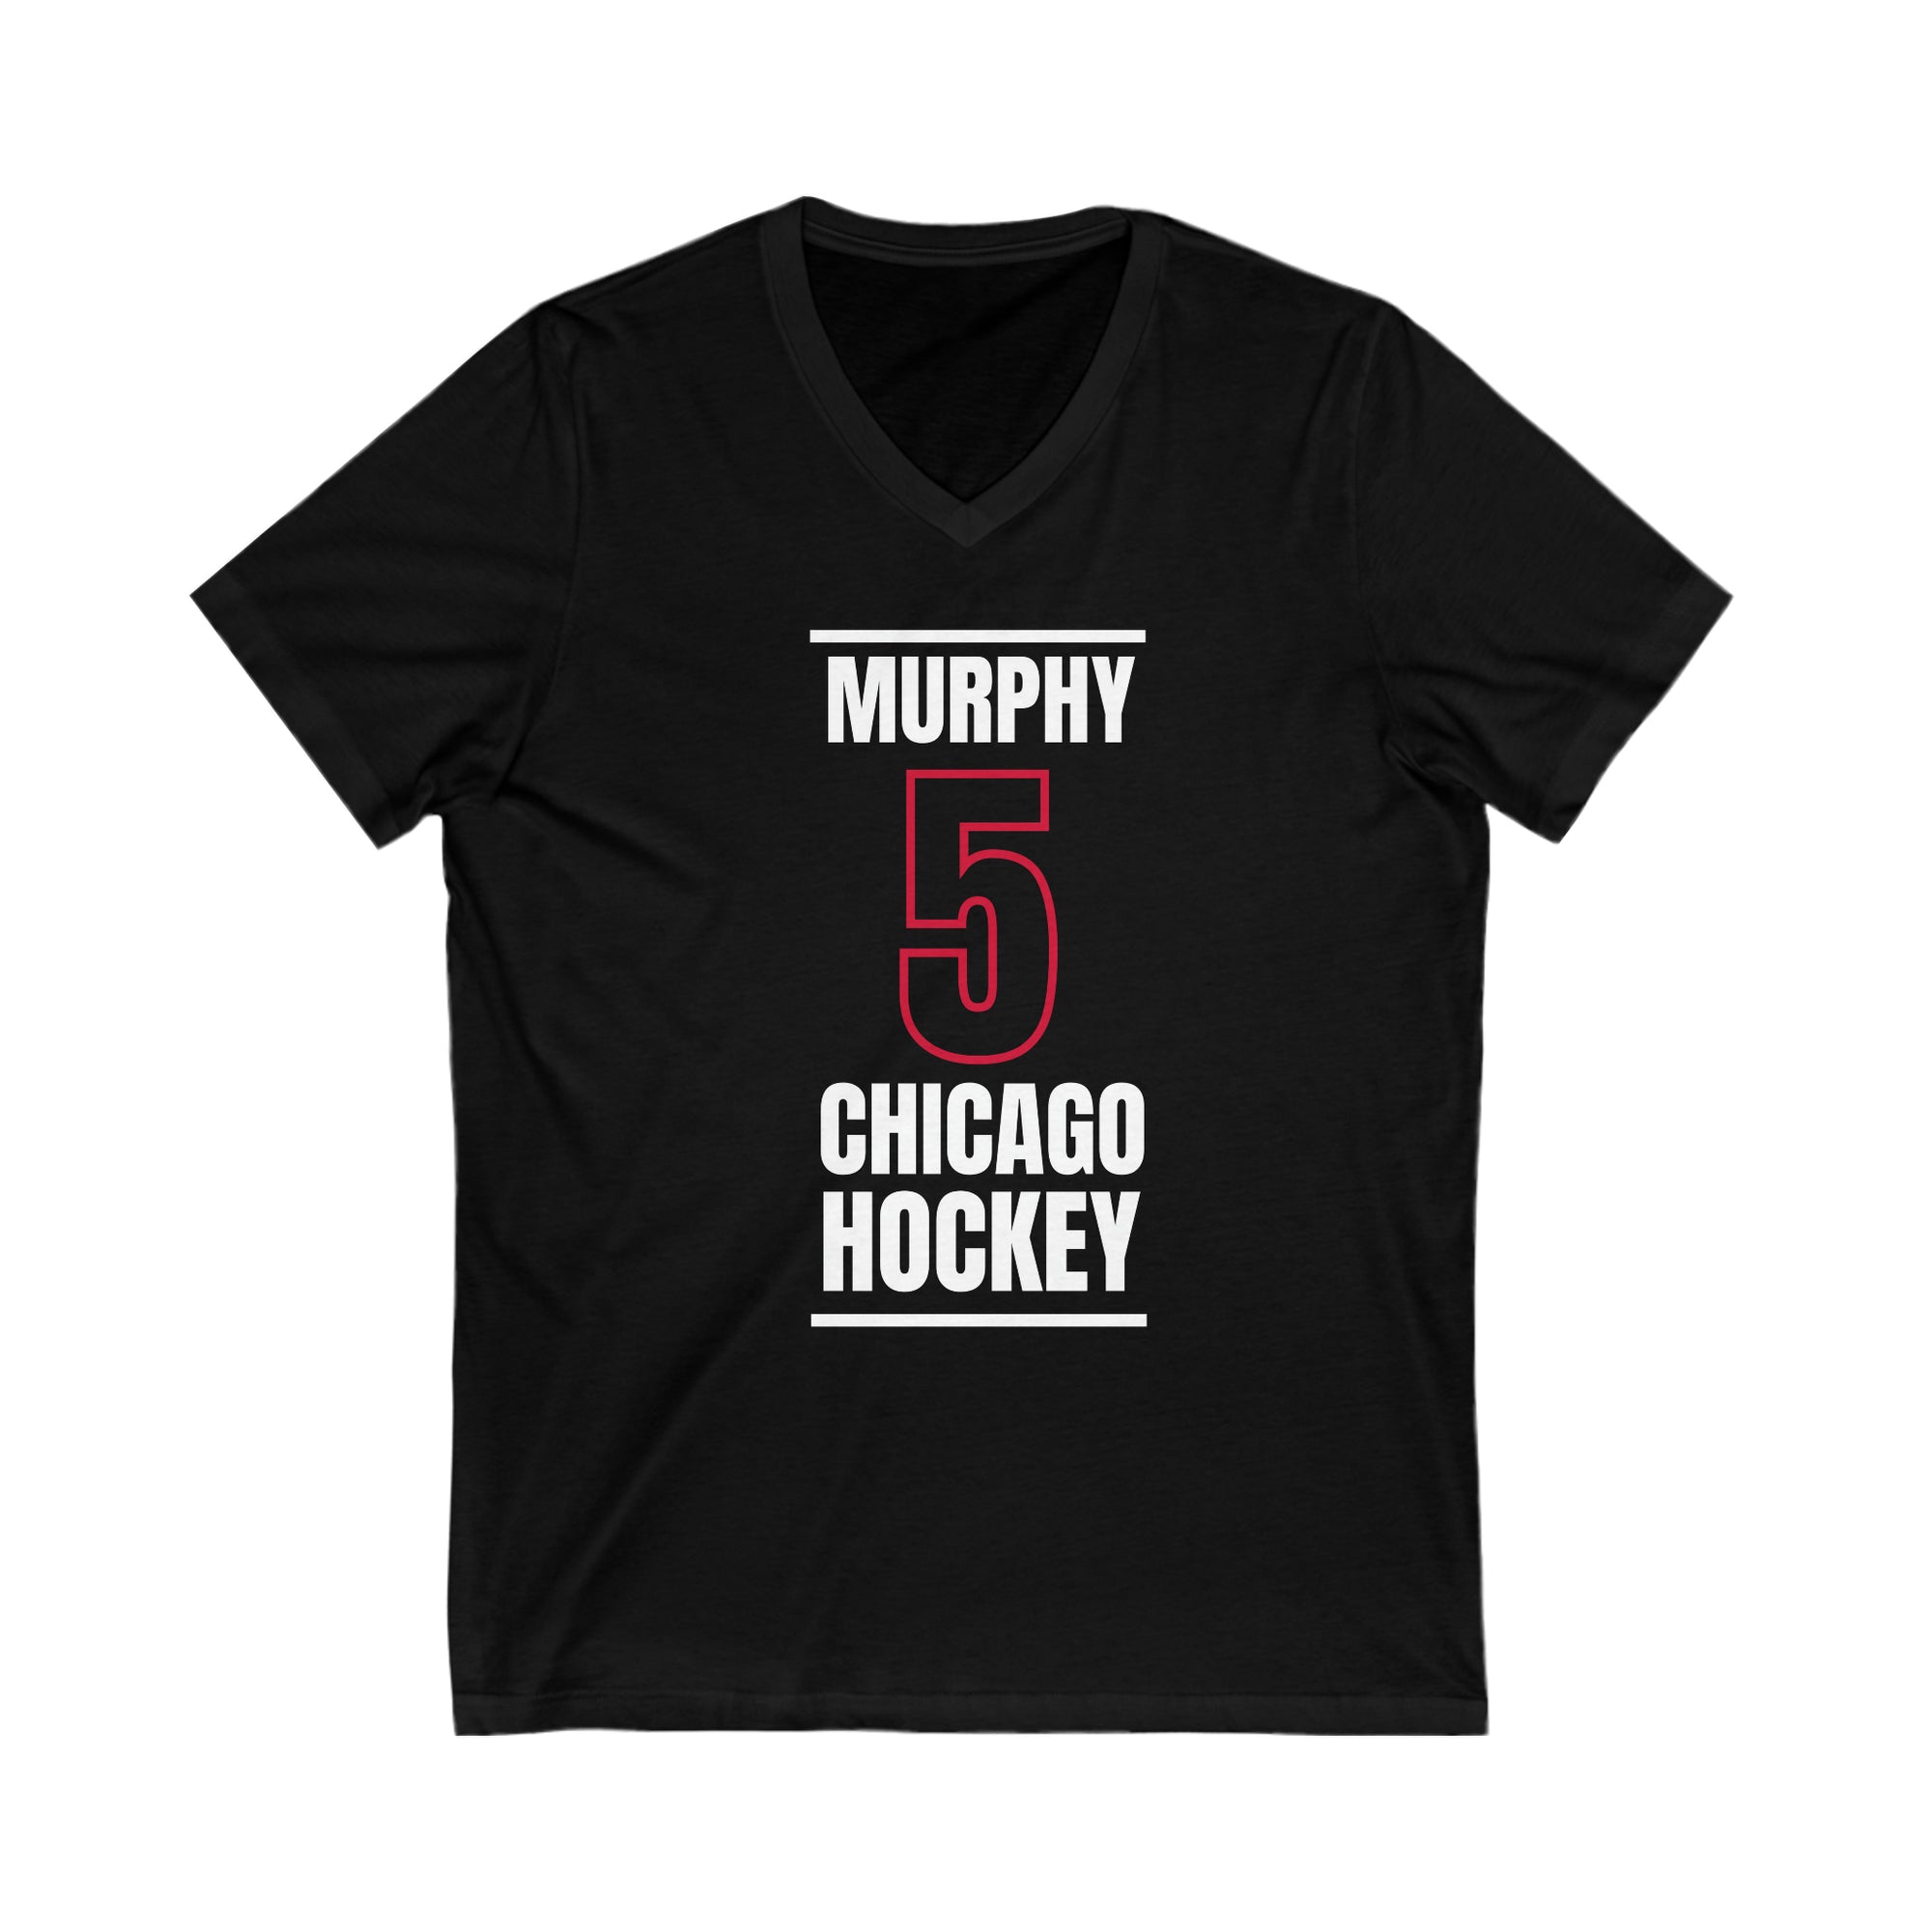 Murphy 5 Chicago Hockey Black Vertical Design Unisex V-Neck Tee